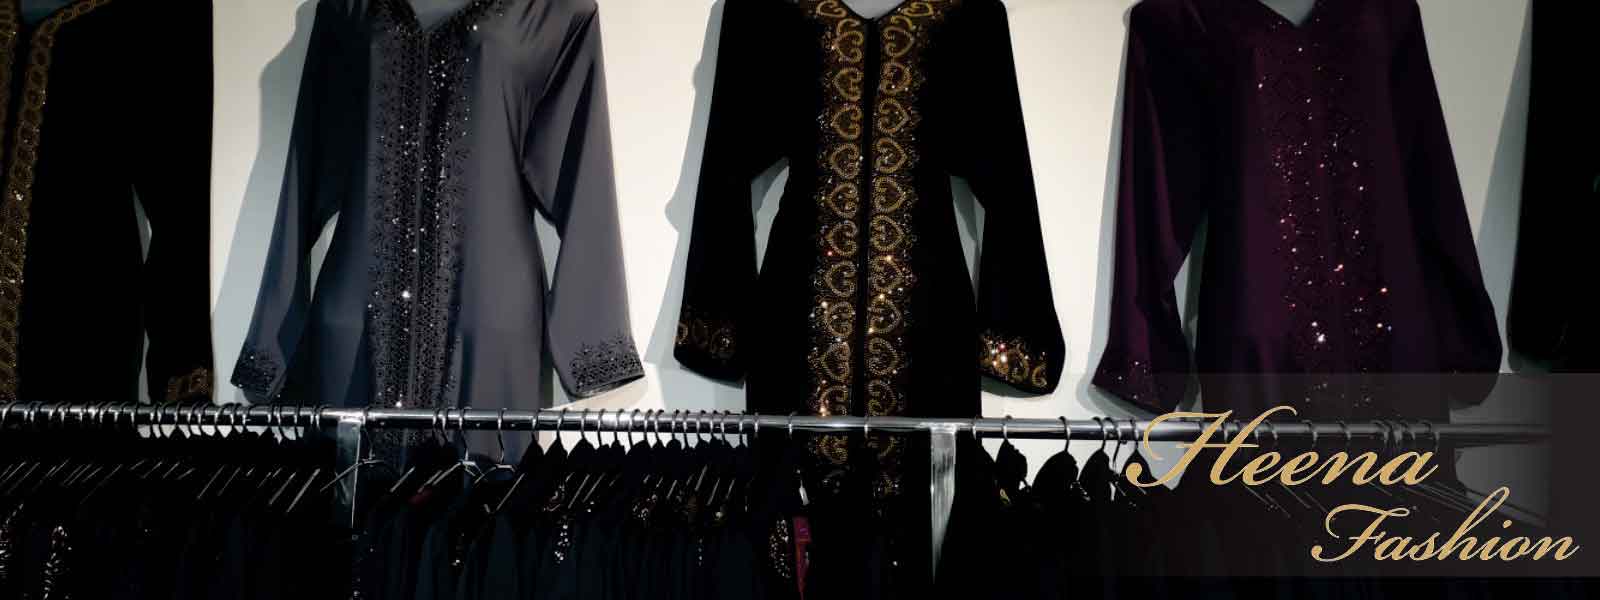 Millat Trade Directory: Heena Fashion